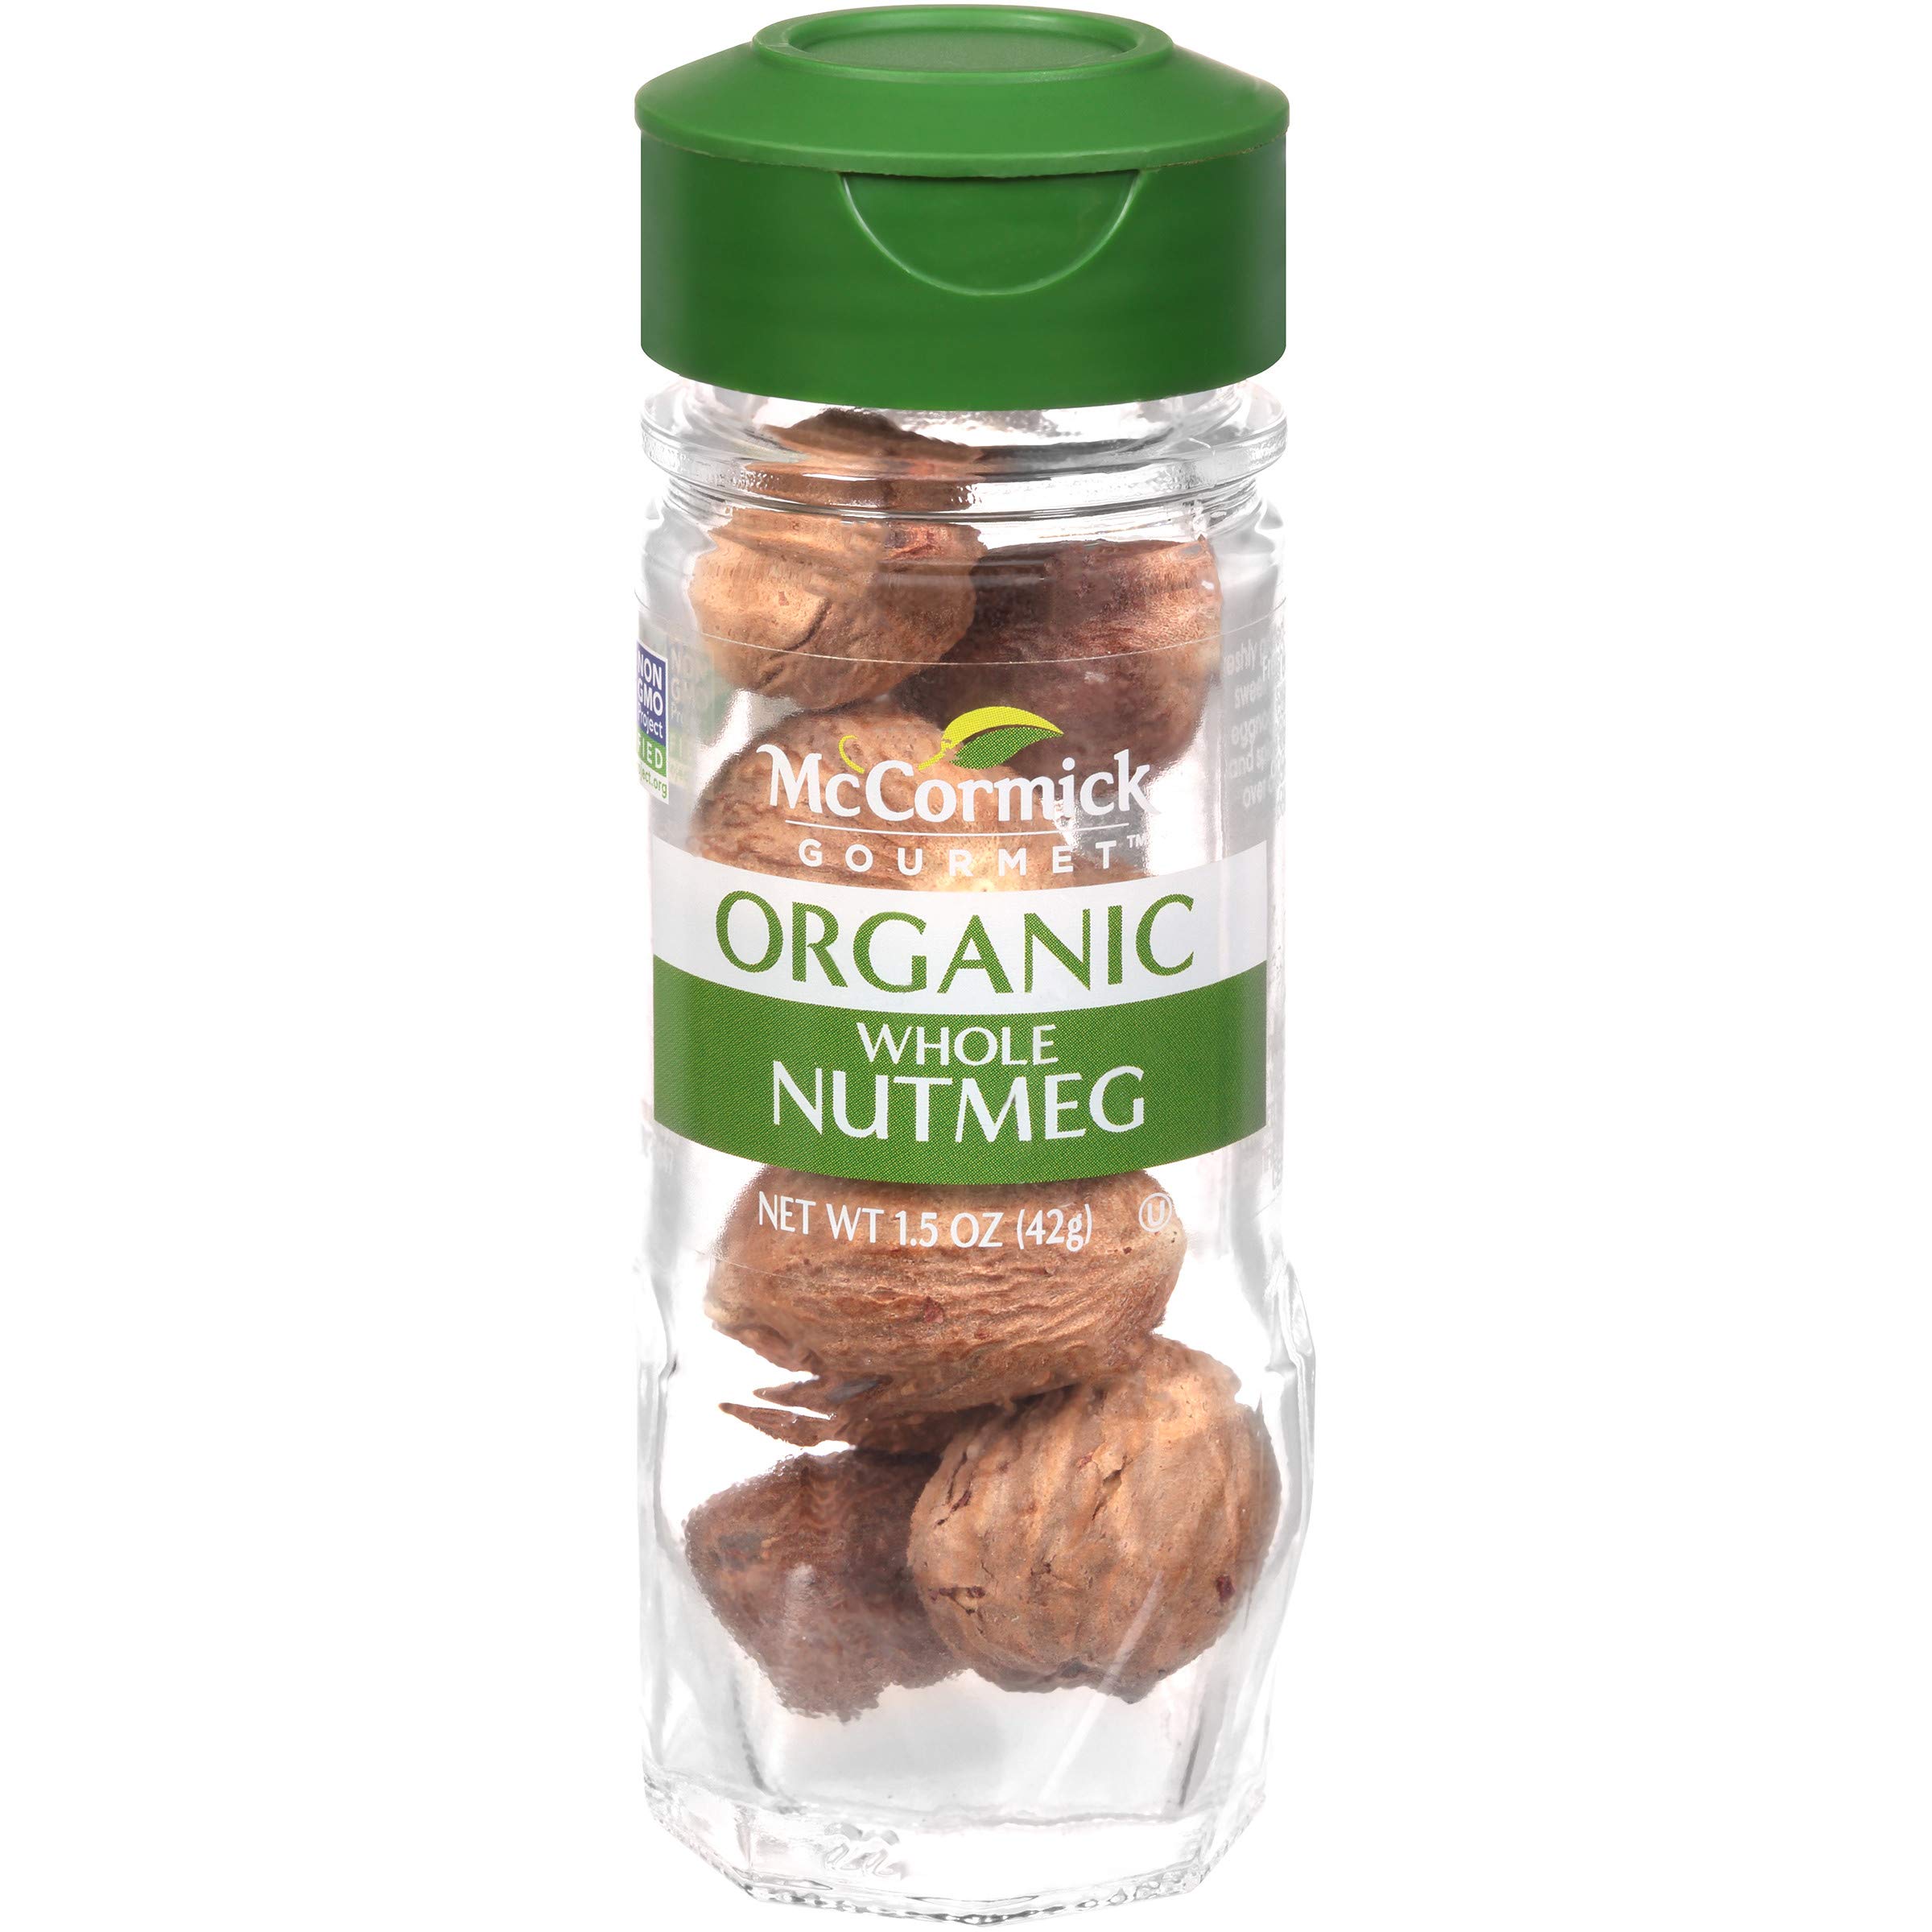 Mccormick gourmet Organic Whole Nutmeg 1.5 oz